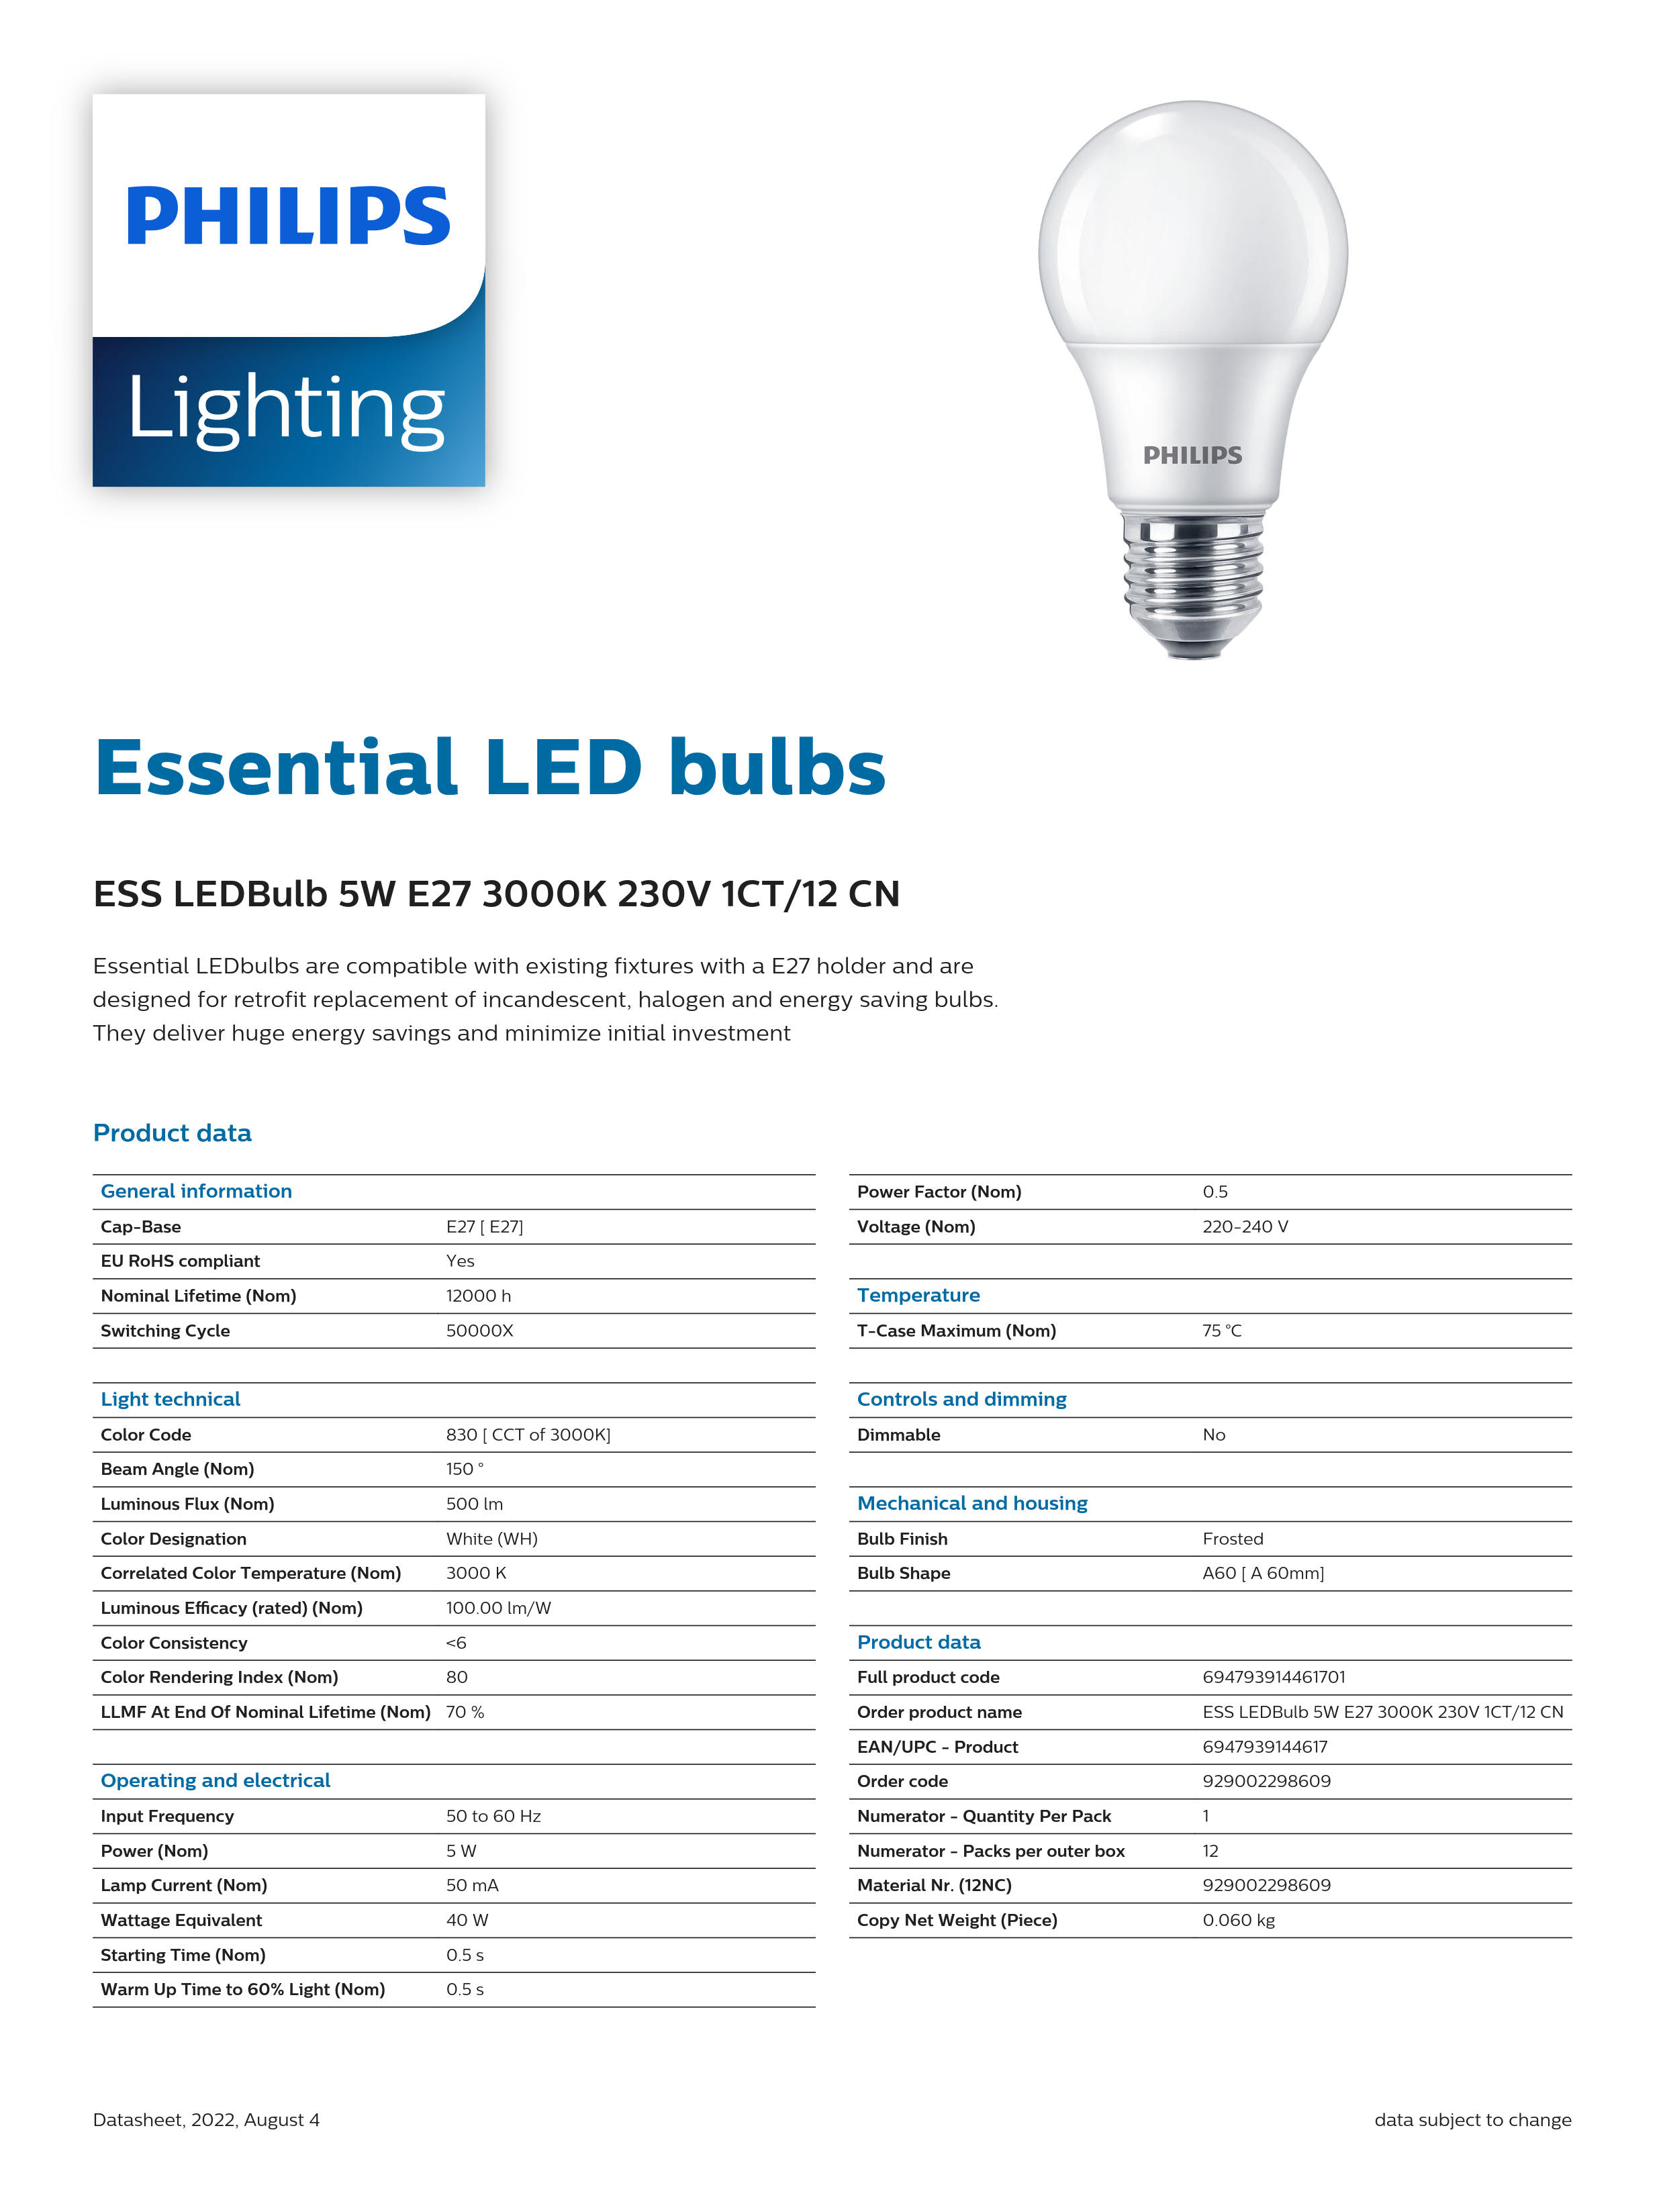 PHILIPS Essential LED bulbs 7W E27 3000K 230V 1CT/12 CN 929002298909